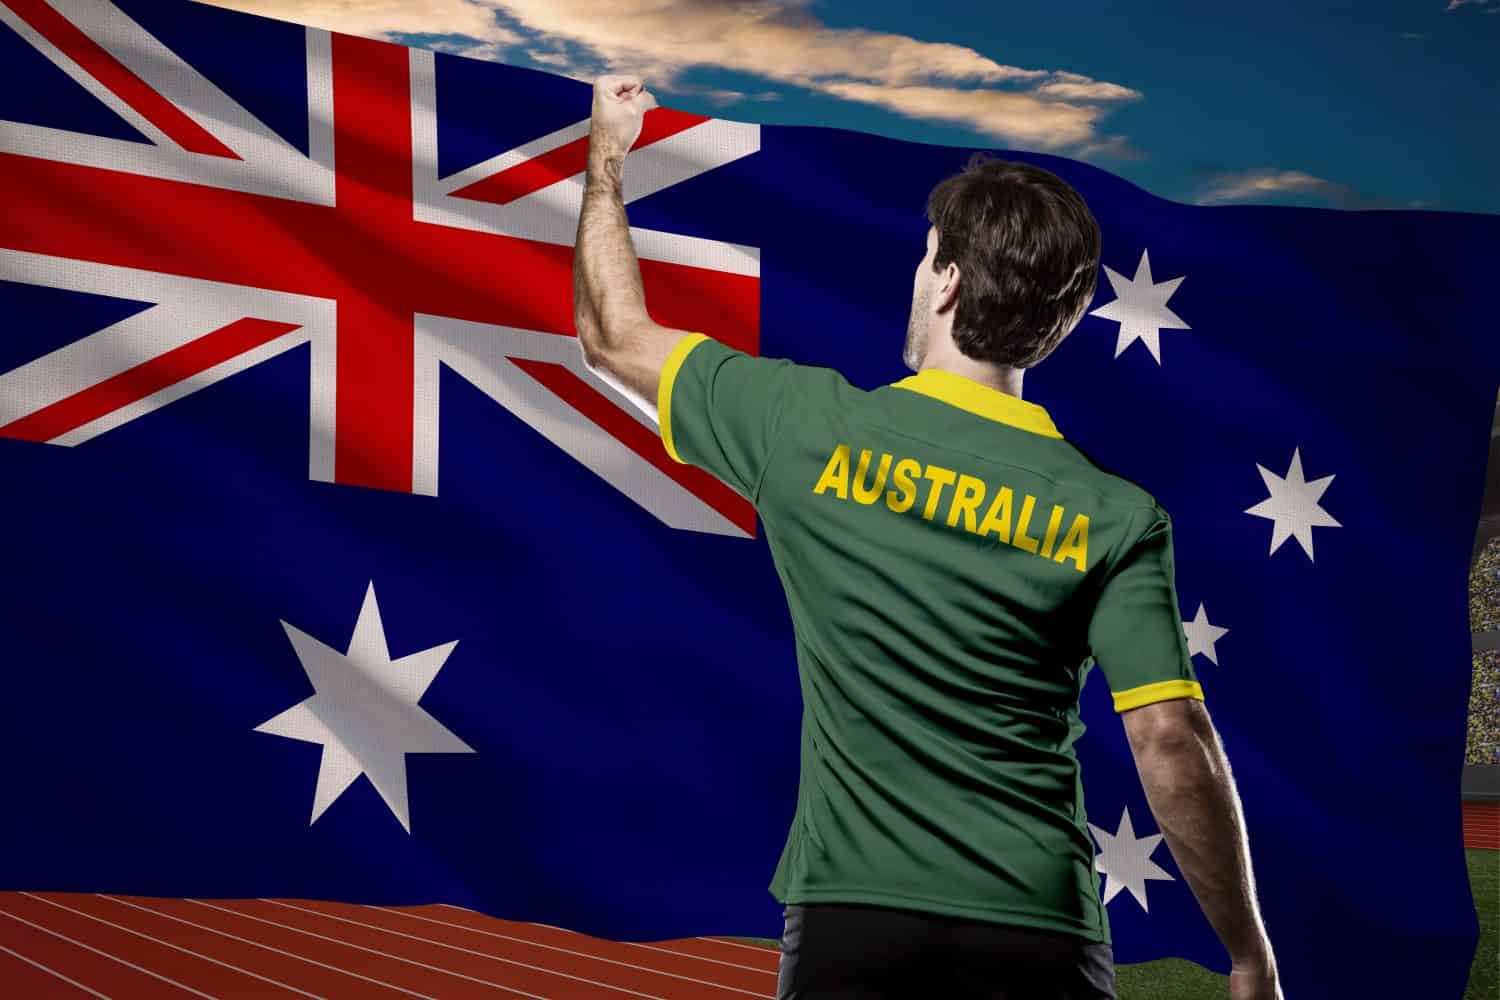 Australian Athlete Winning a golden medal in front of a Australian flag.